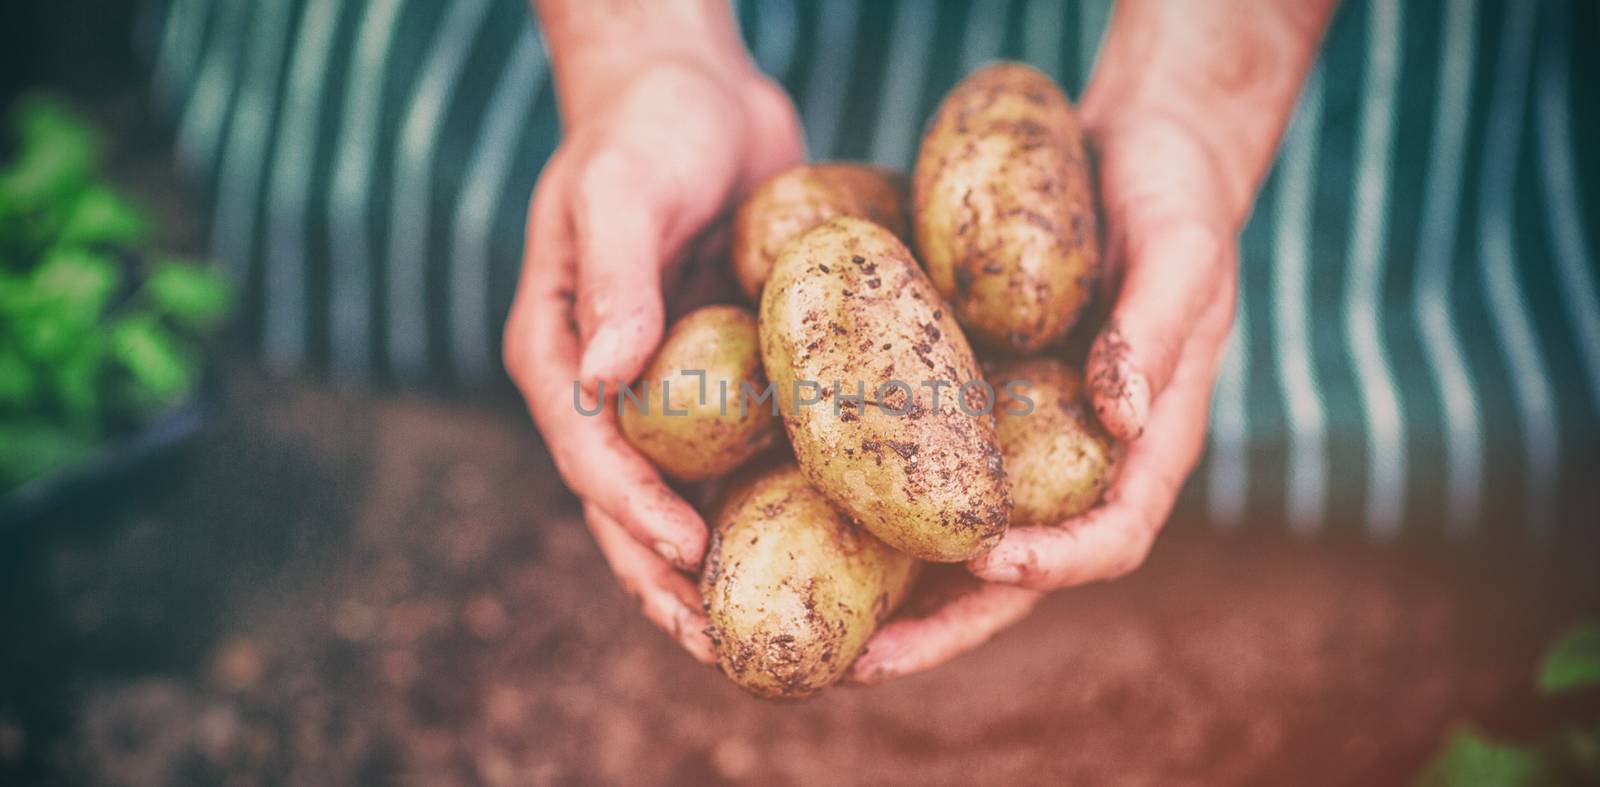 Gardener harvesting potatoes at greenhouse, Close-up